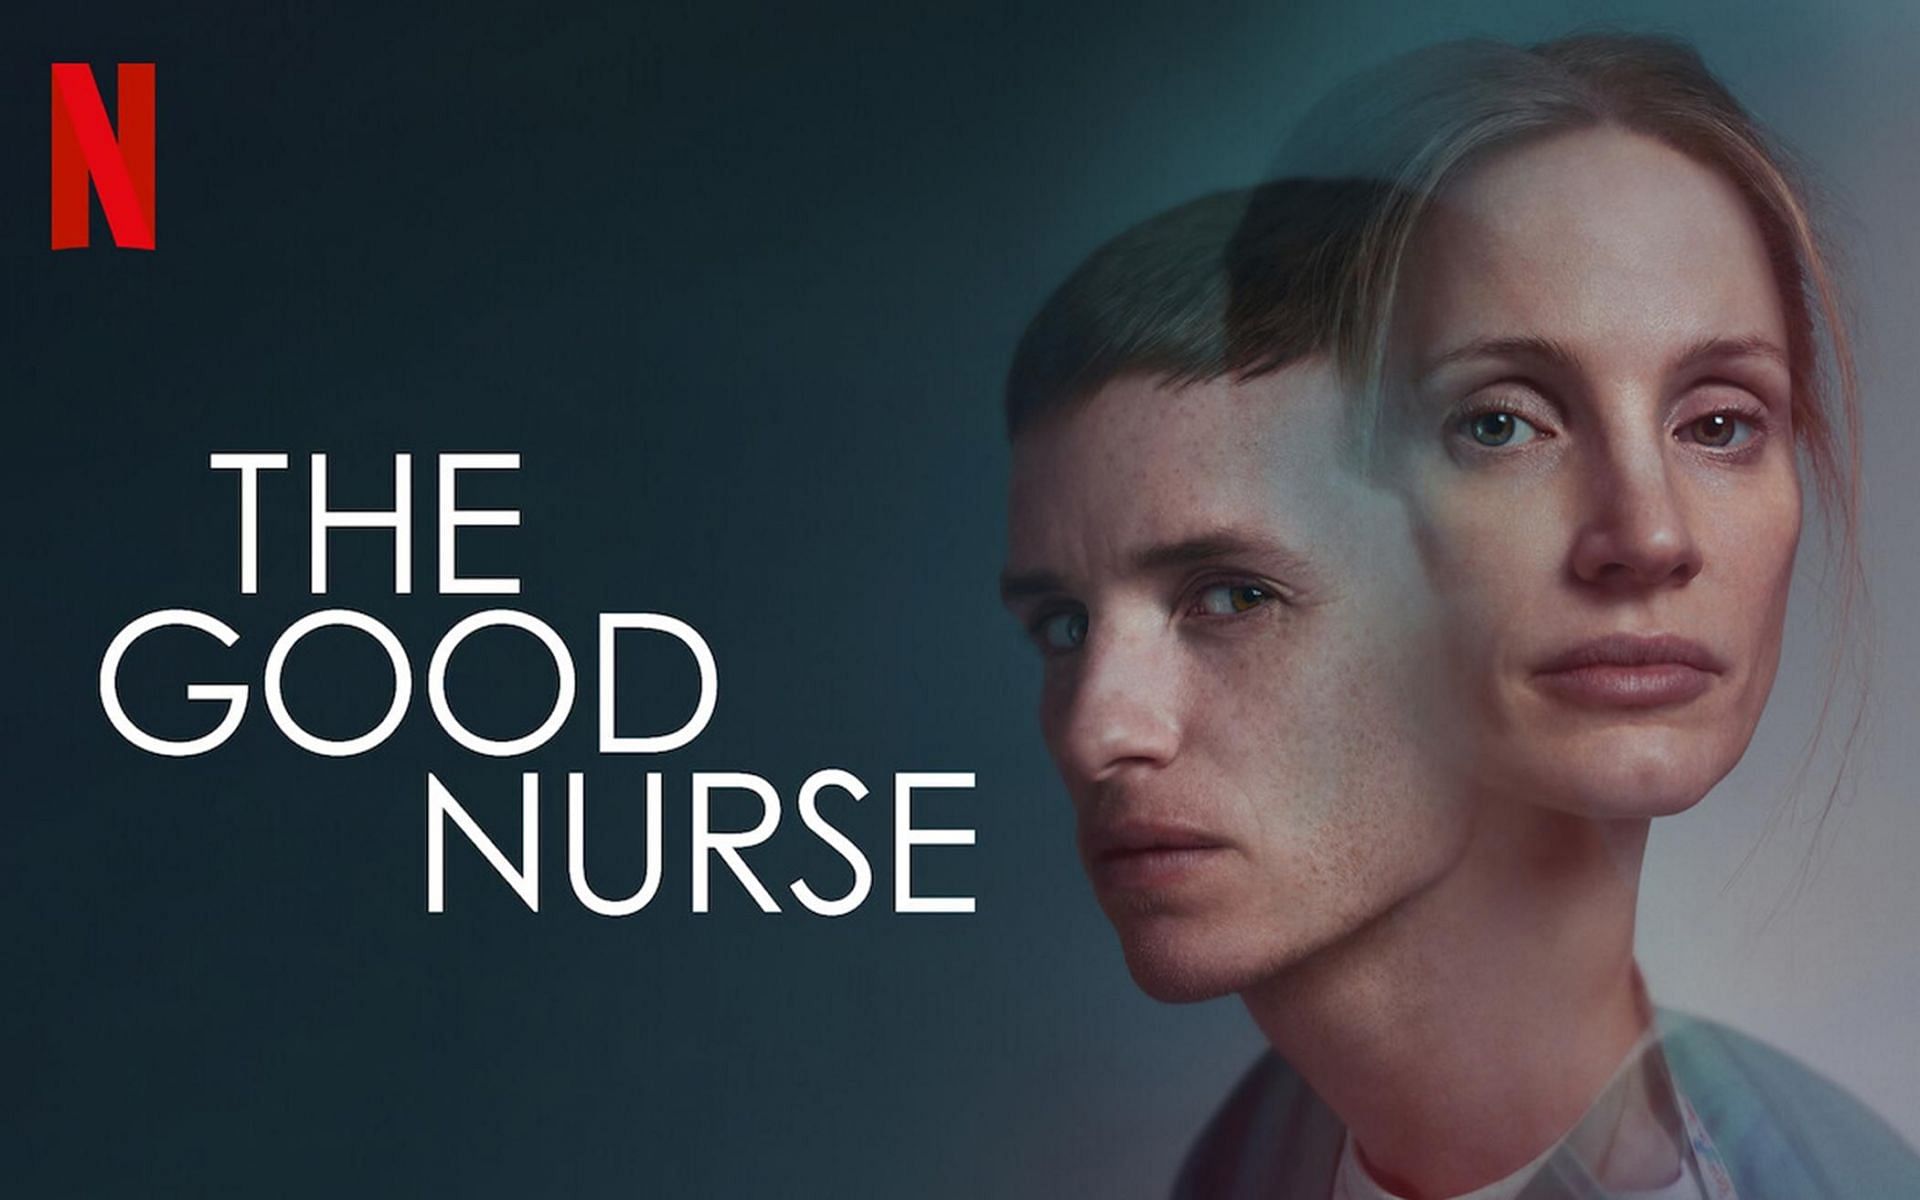 The Good Nurse (Image via Netflix)